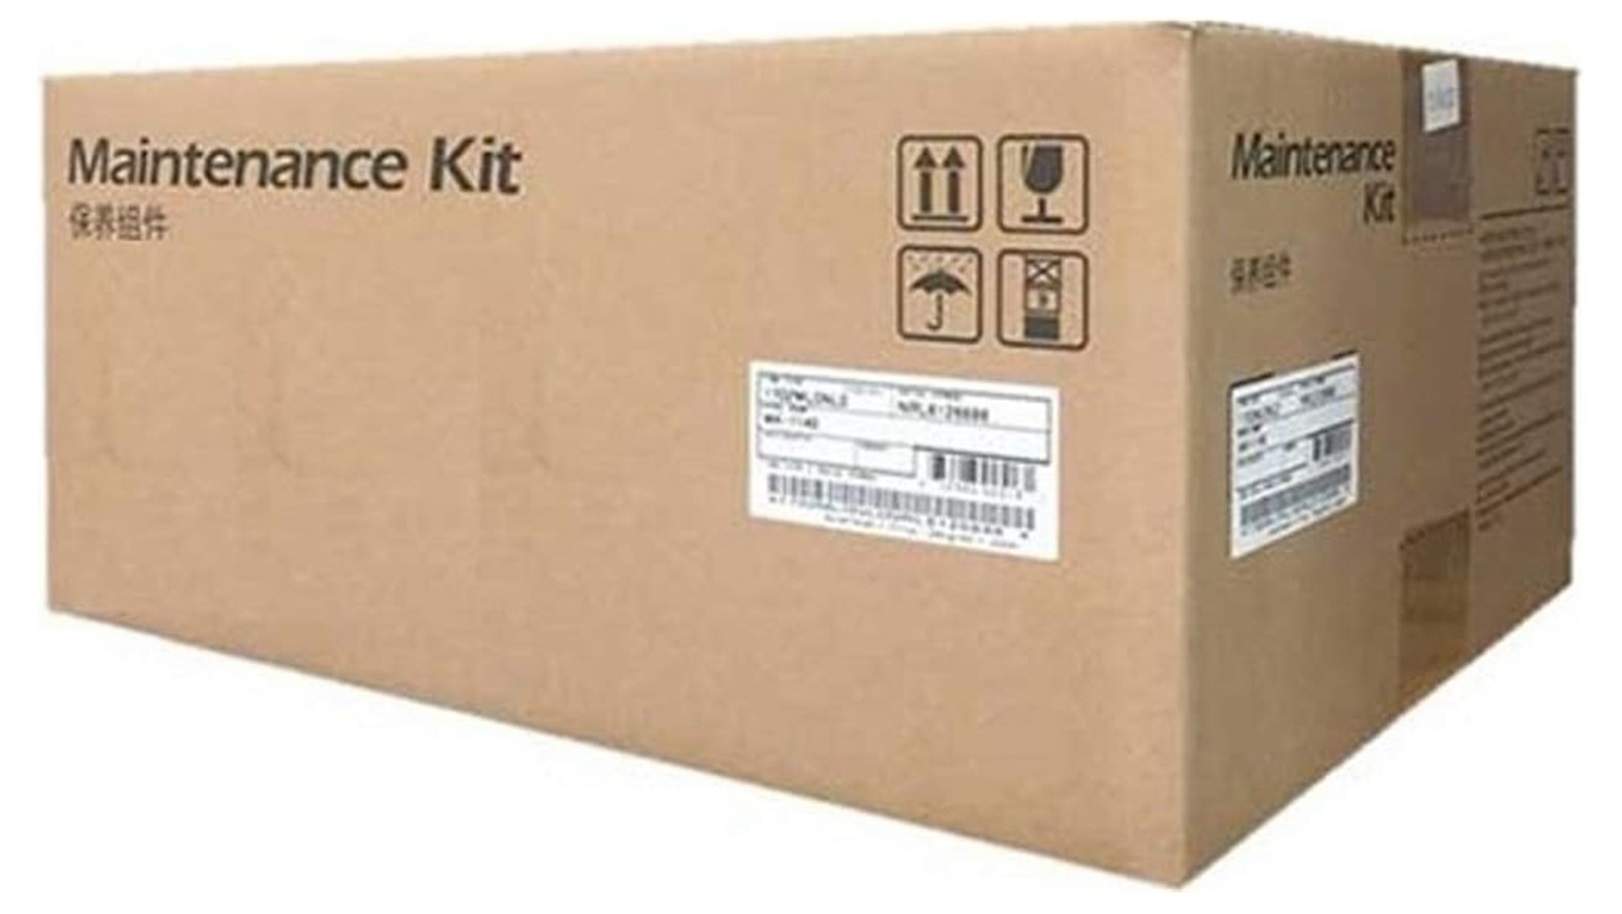 Kit de Mantenimiento para Kyocera MA5500ifx | 2404 - Kit de Mantenimiento MK-3382 para Kyocera MA5500ifx. Rendimiento 500.000 Páginas. 170C0T7US0 